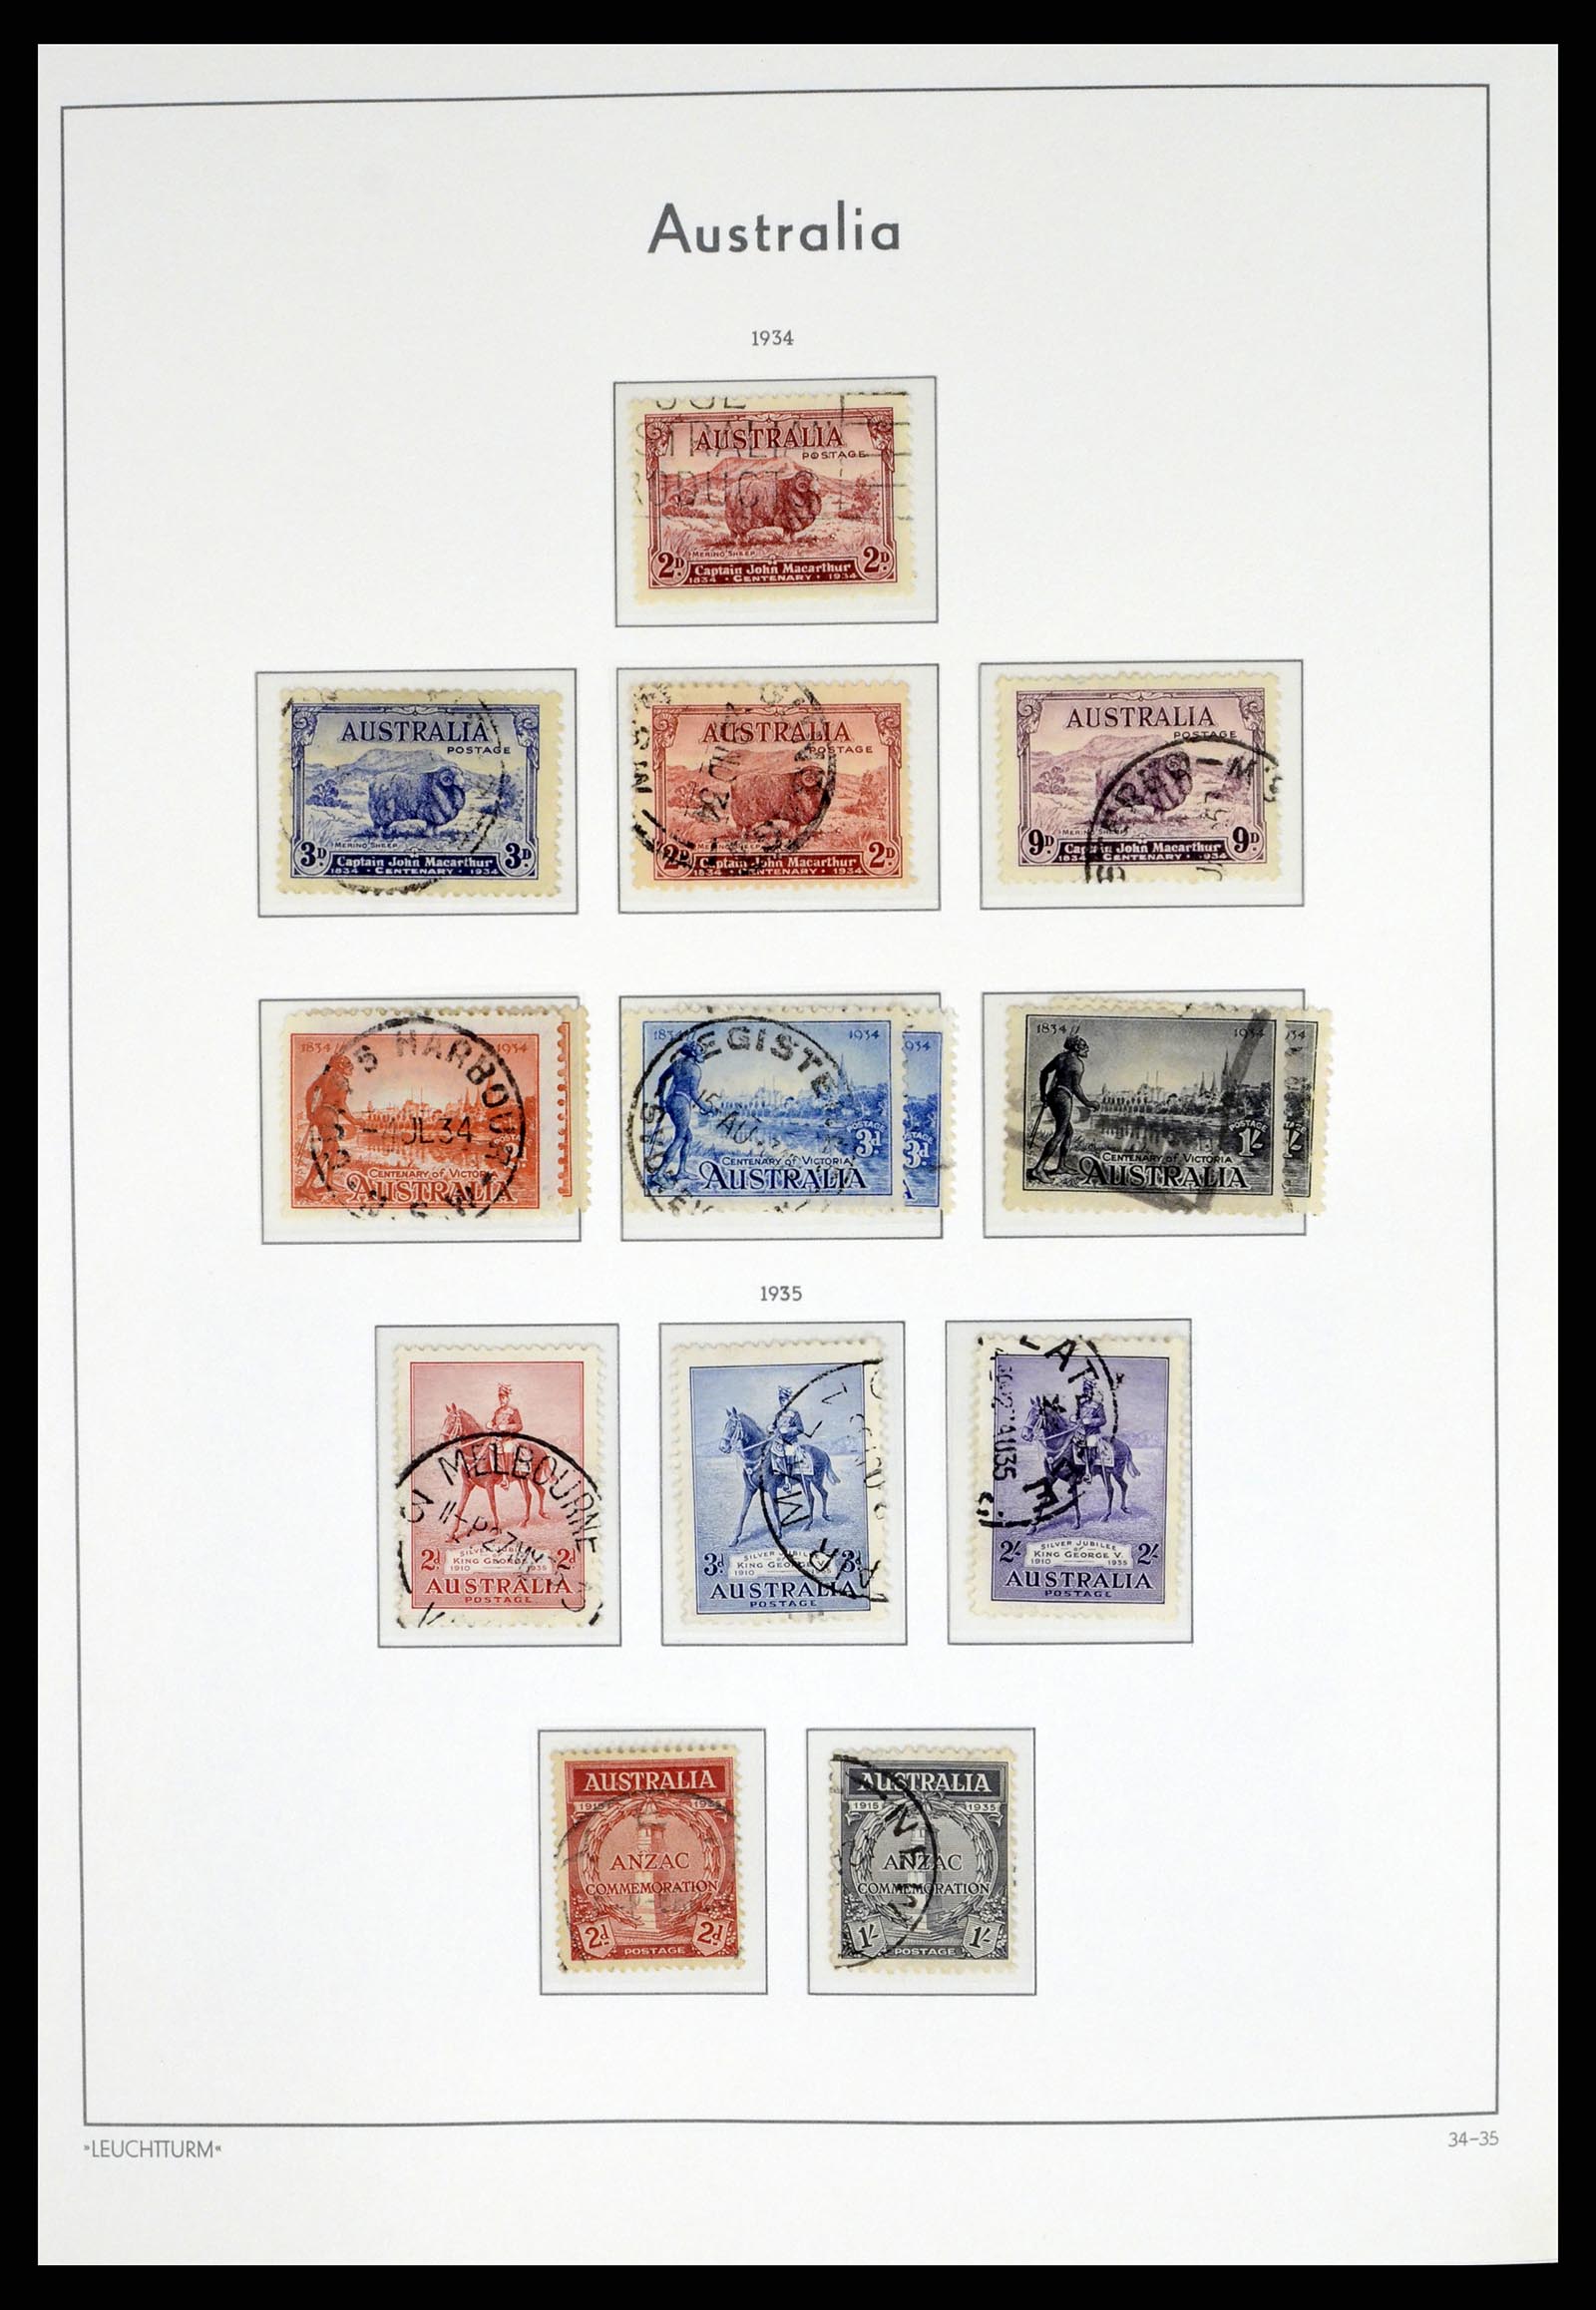 37623 015 - Stamp collection 37623 Australia 1913-1995.